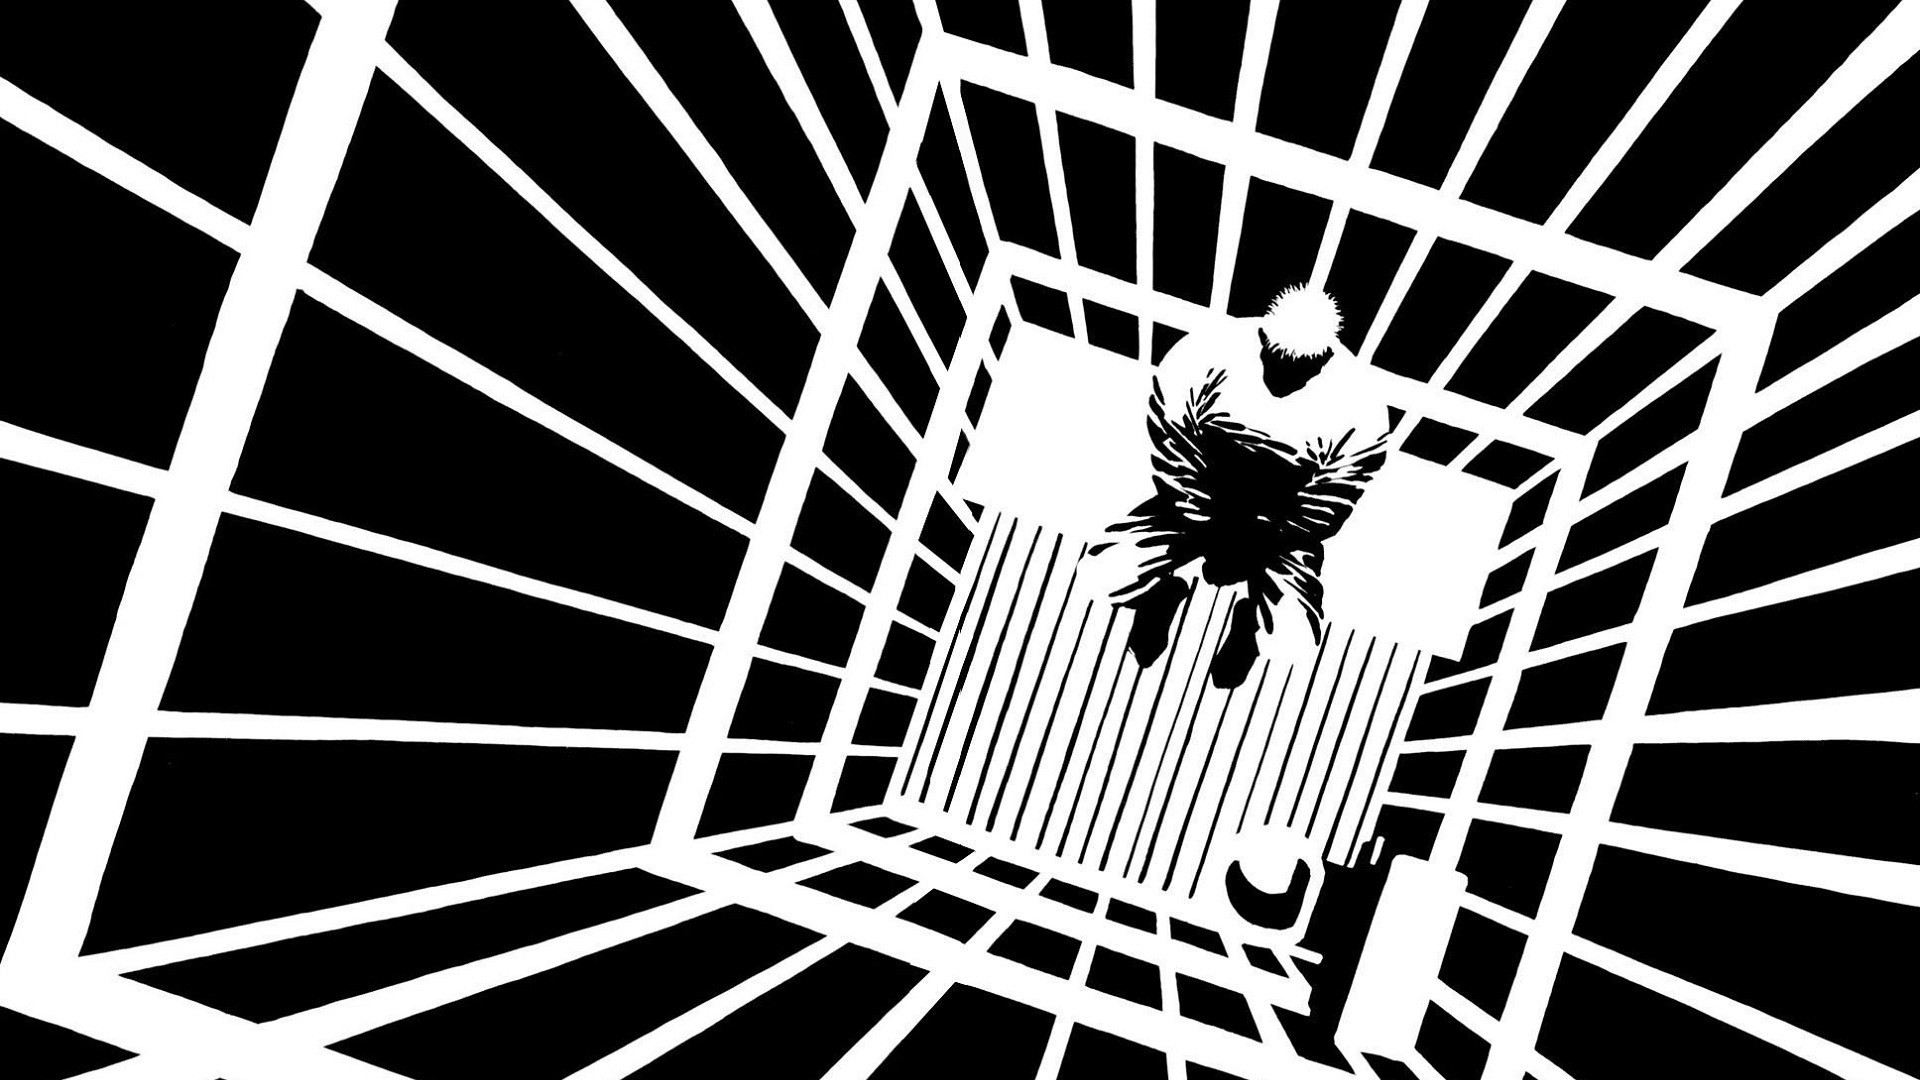 Prisoners Digital Art Sin City 1920x1080